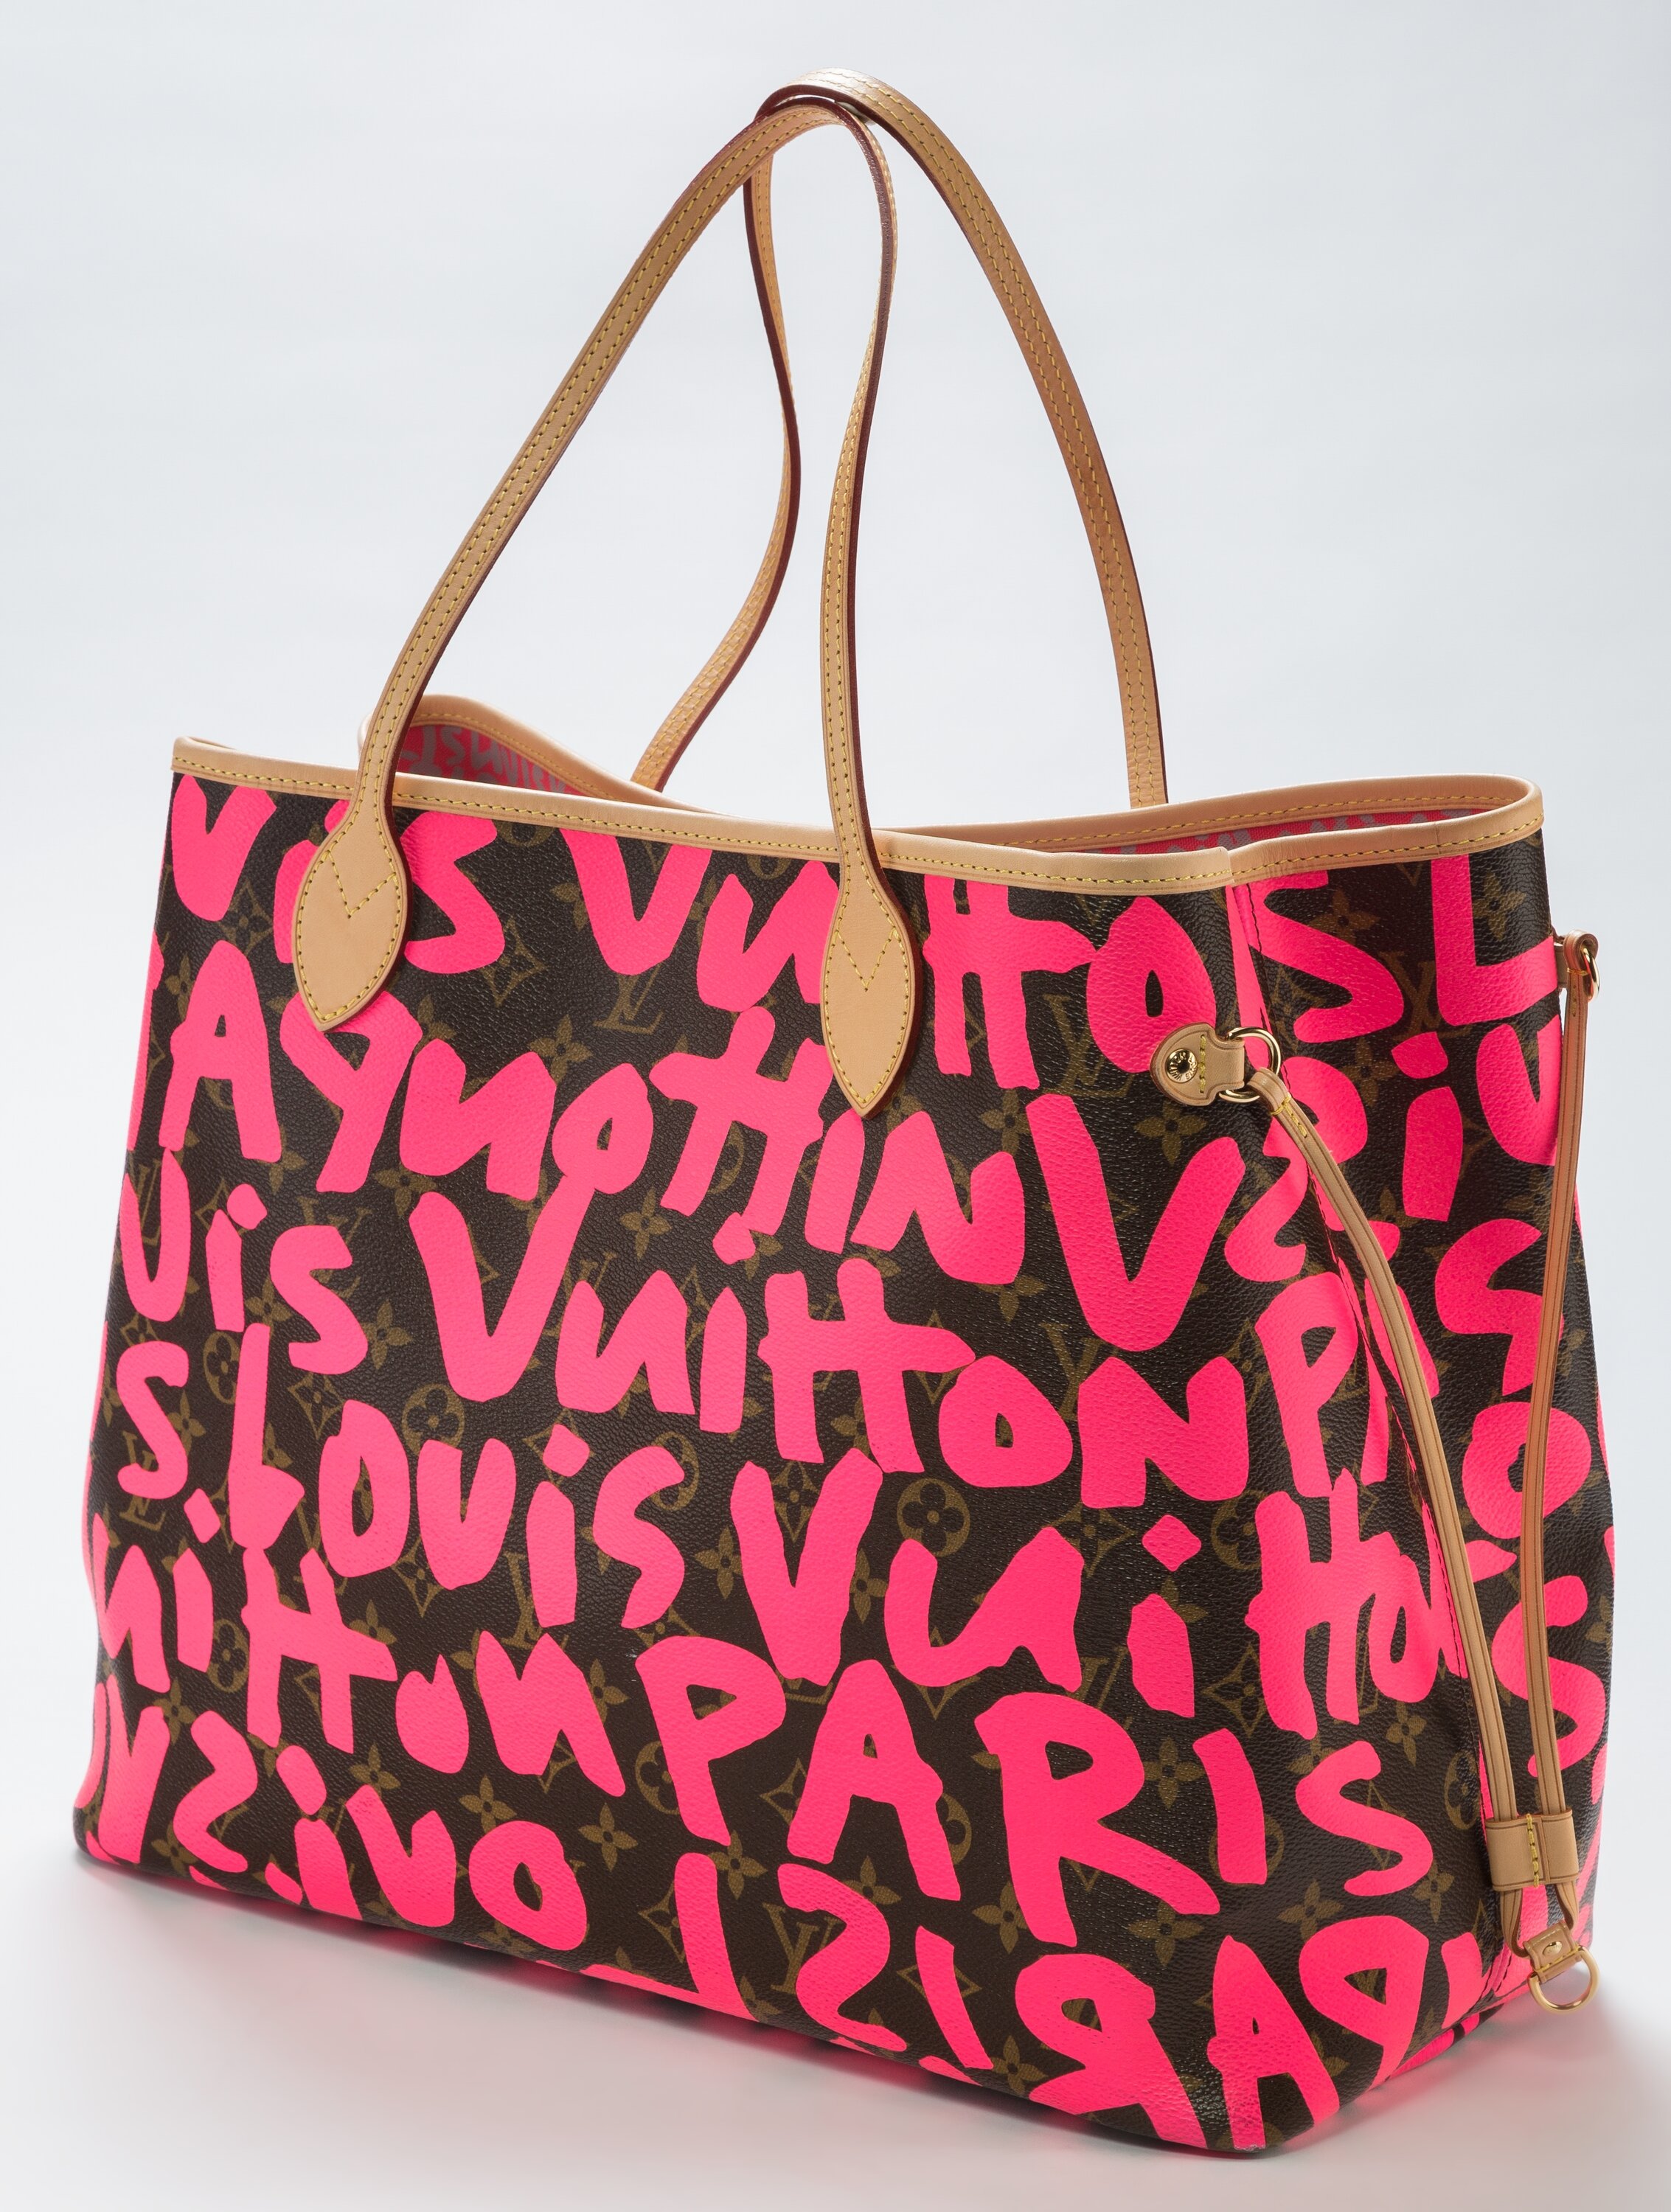 Louis Vuitton Stephen Sprouse Pink Monogram Graffiti Coated Canvas Neverfull GM Gold Hardware, 2009 (Very Good), Pink/Brown Womens Handbag